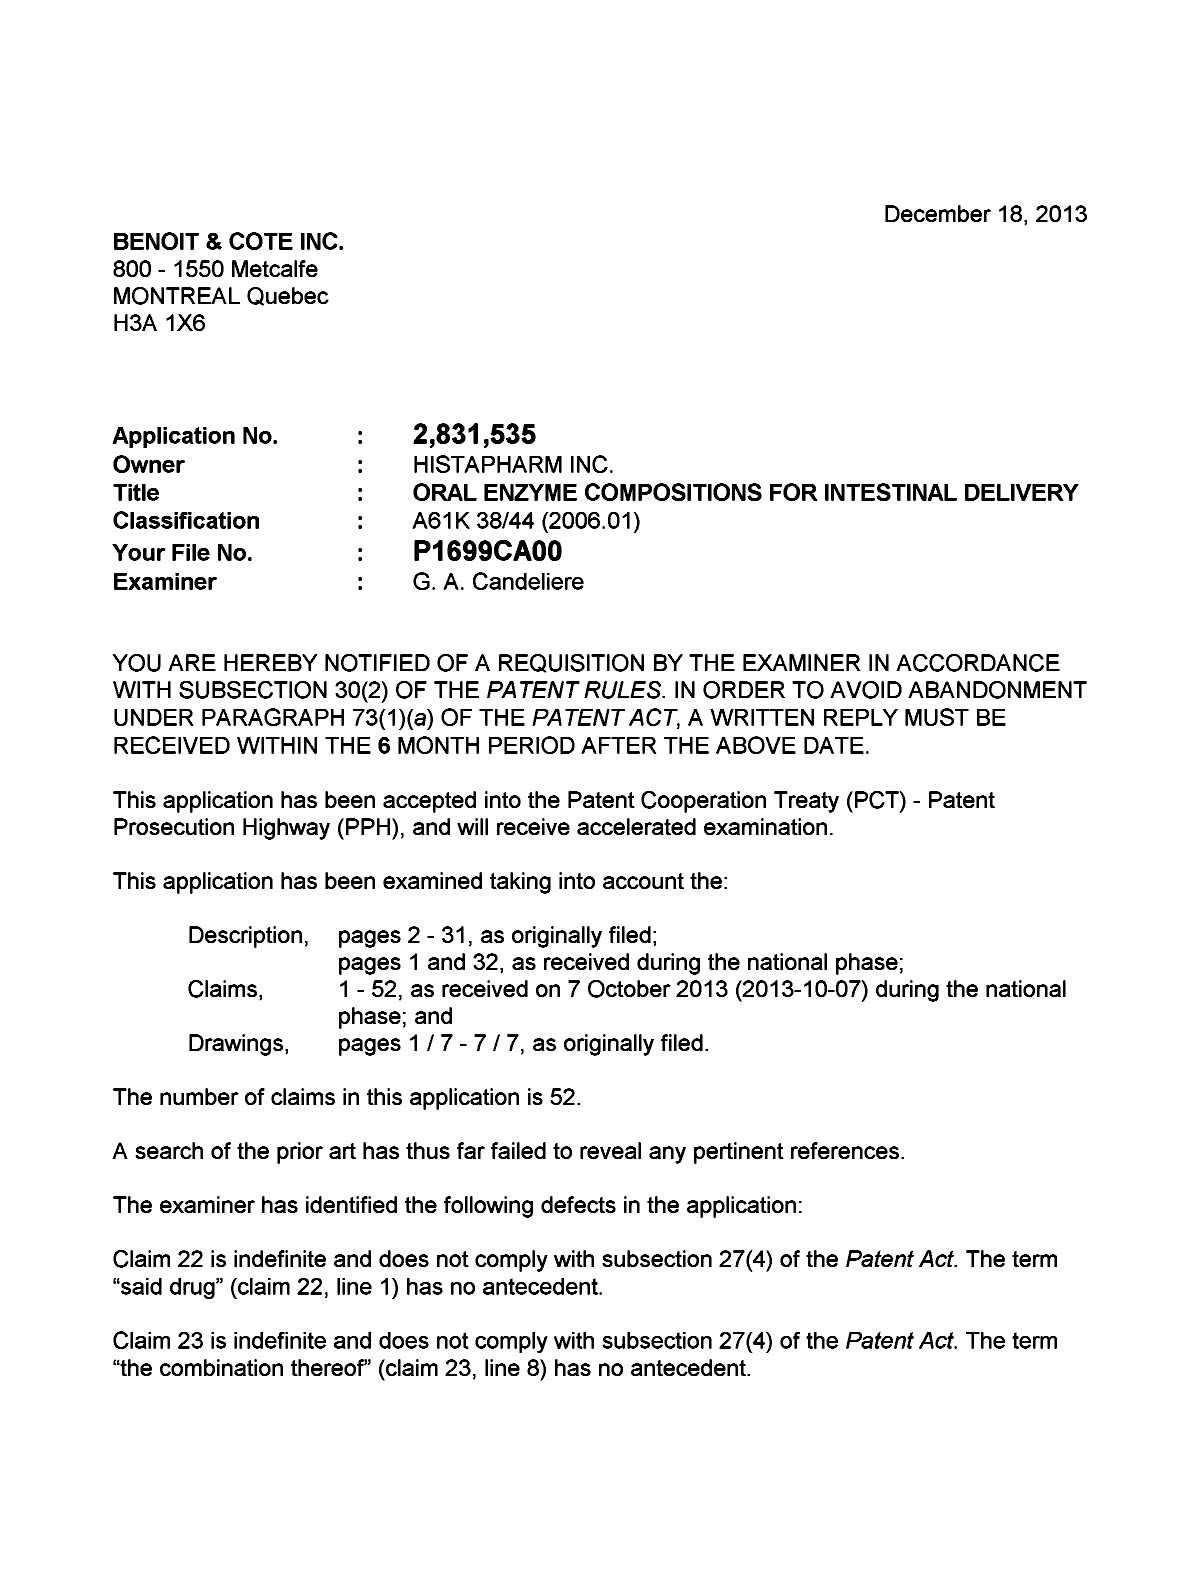 Canadian Patent Document 2831535. Prosecution-Amendment 20131218. Image 1 of 3